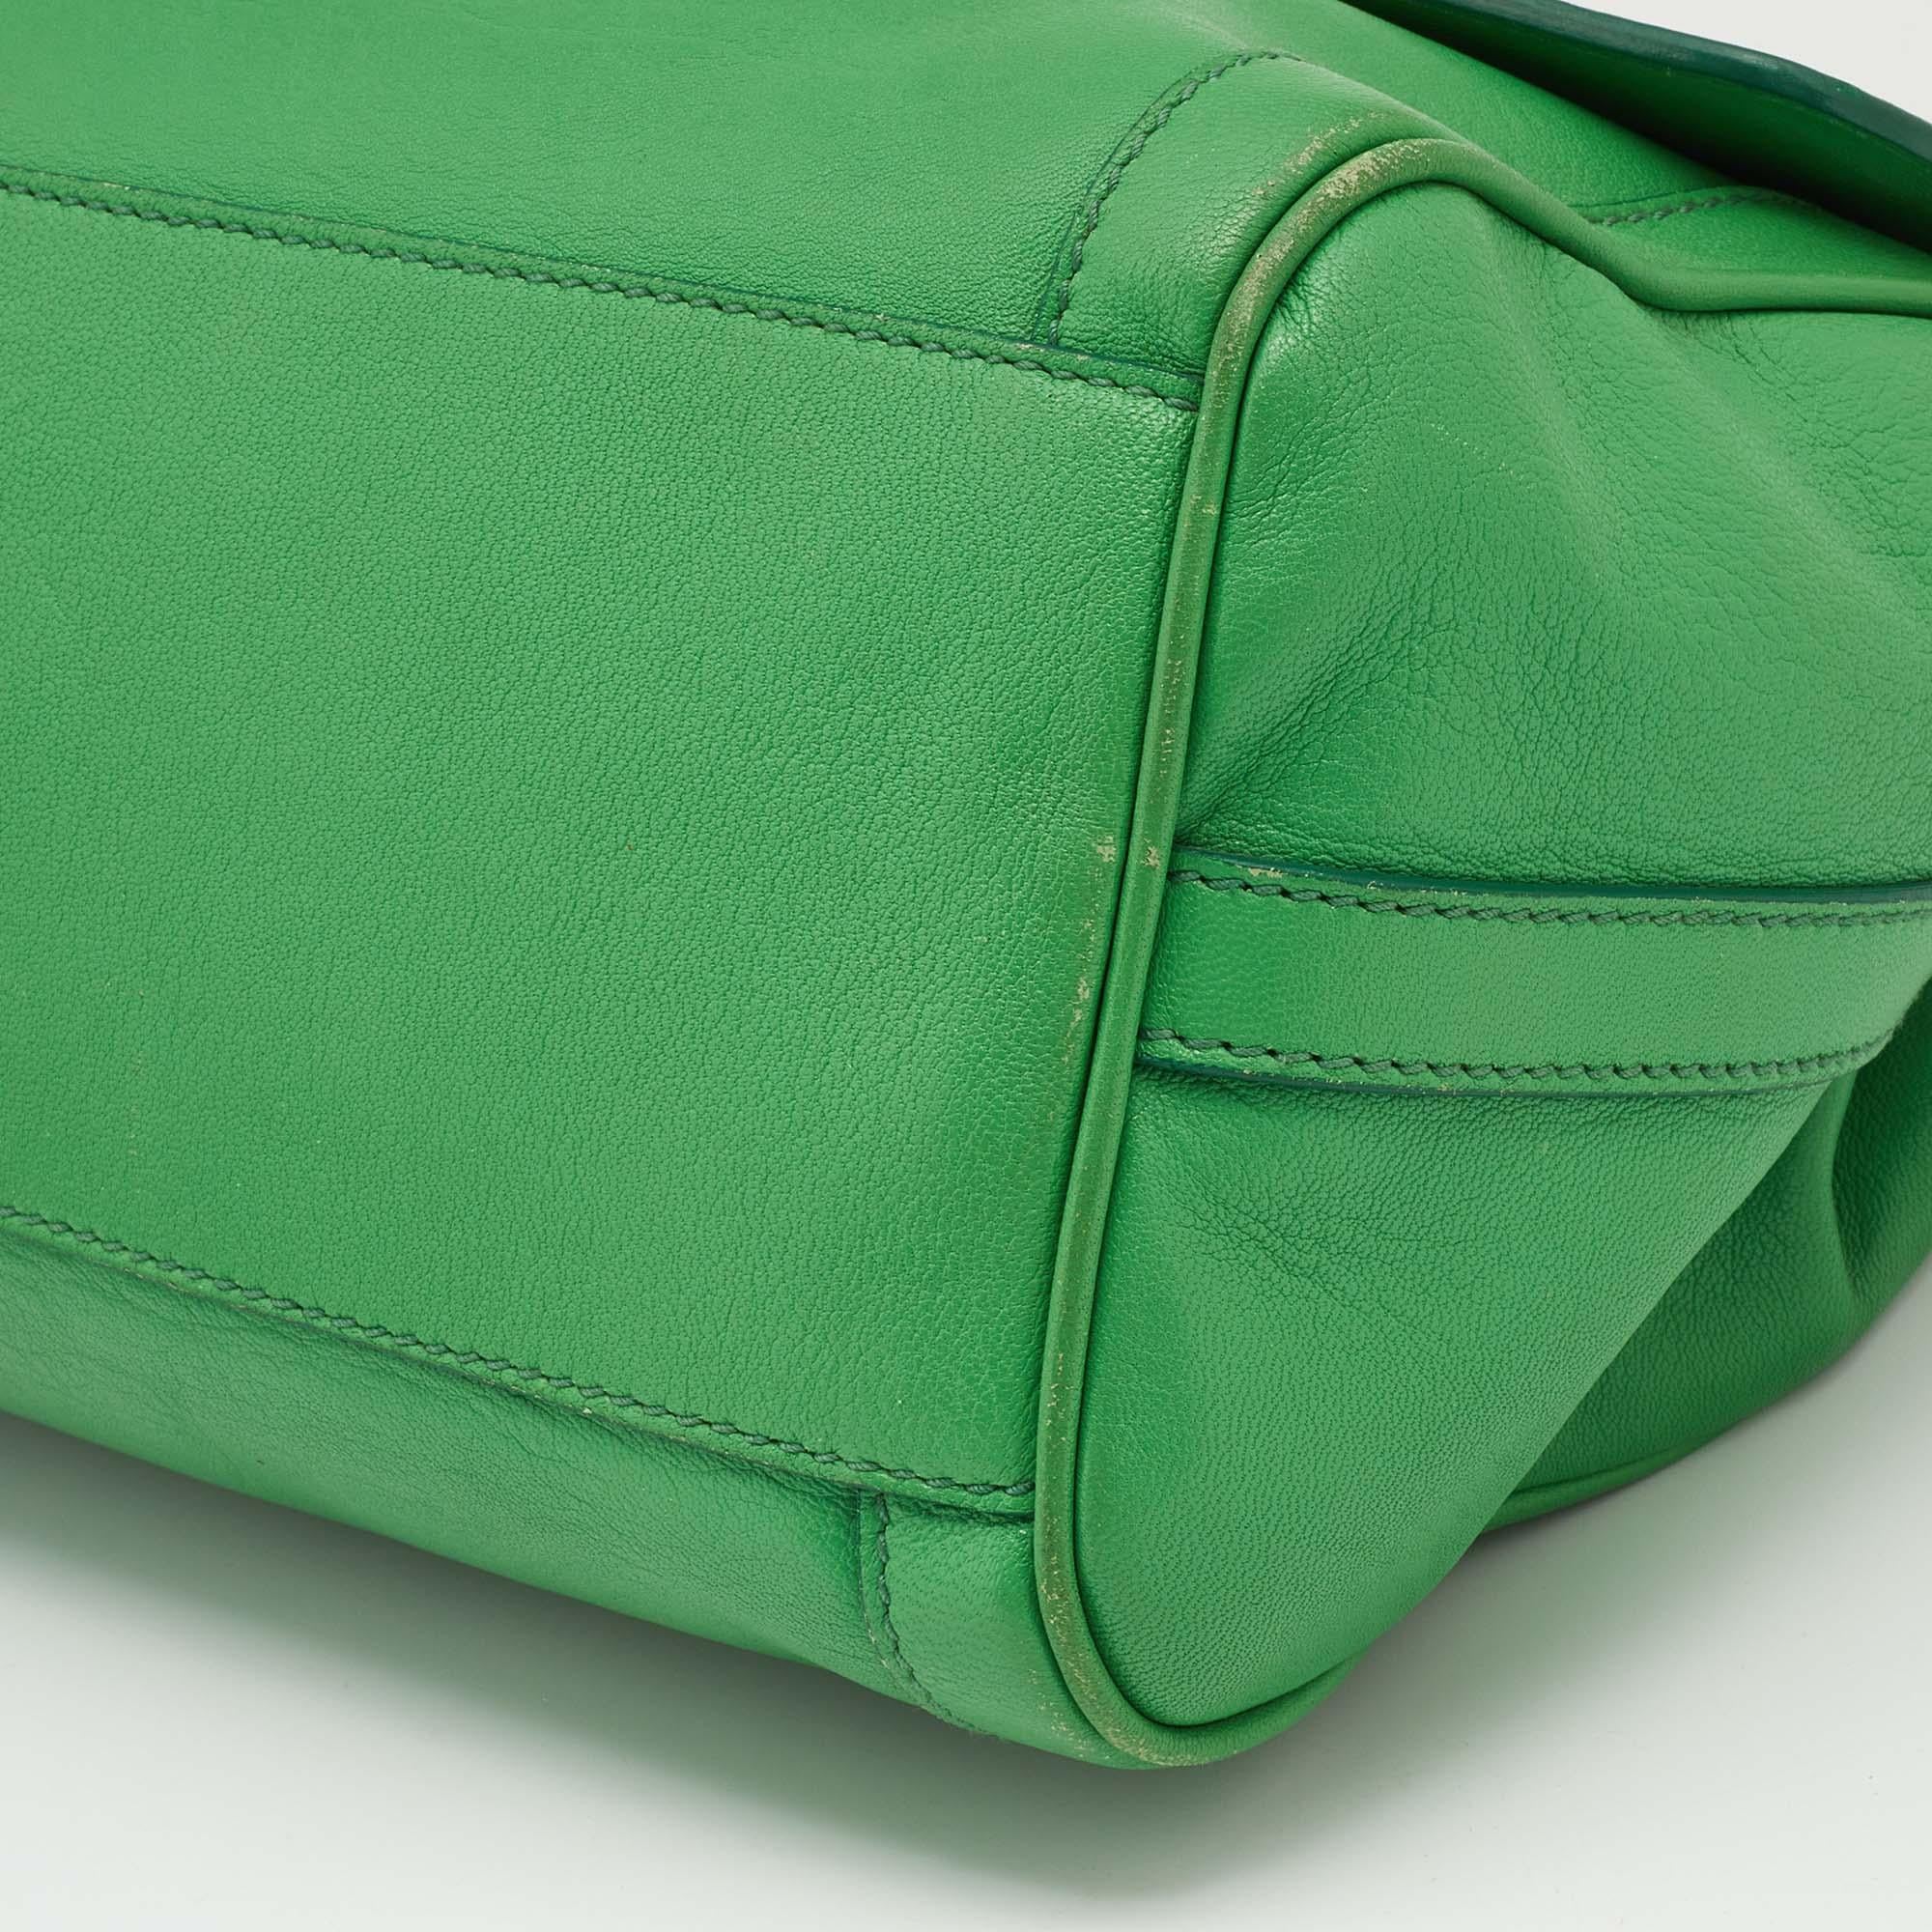 Dolce & Gabbana Green Leather Padlock Top Handle Bag 2